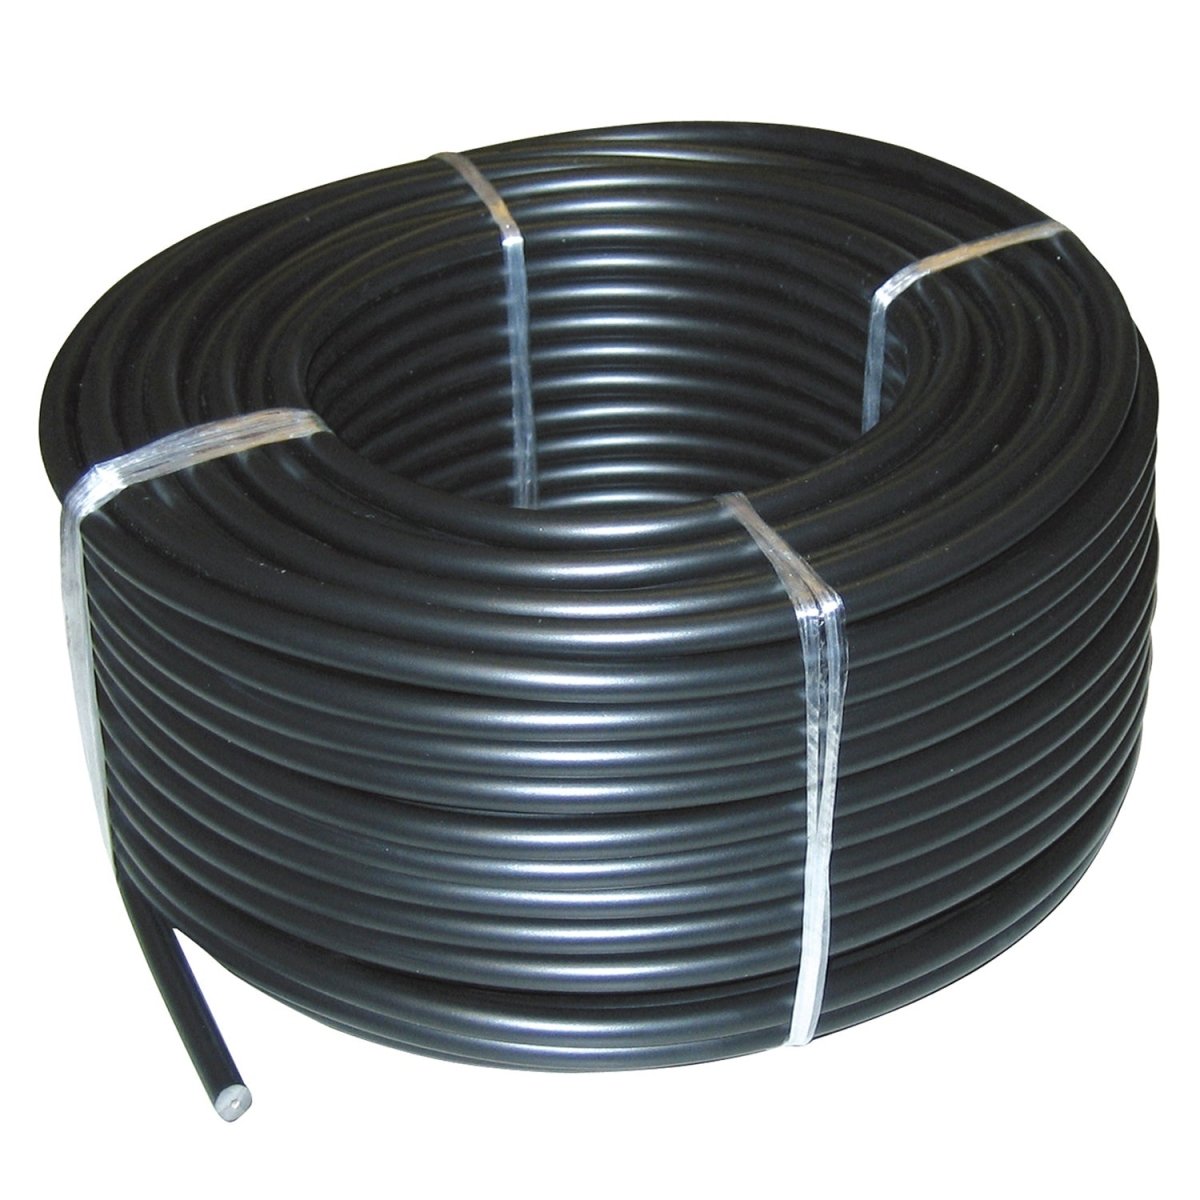 Corral High Voltage Underground Cable - Black - 25M